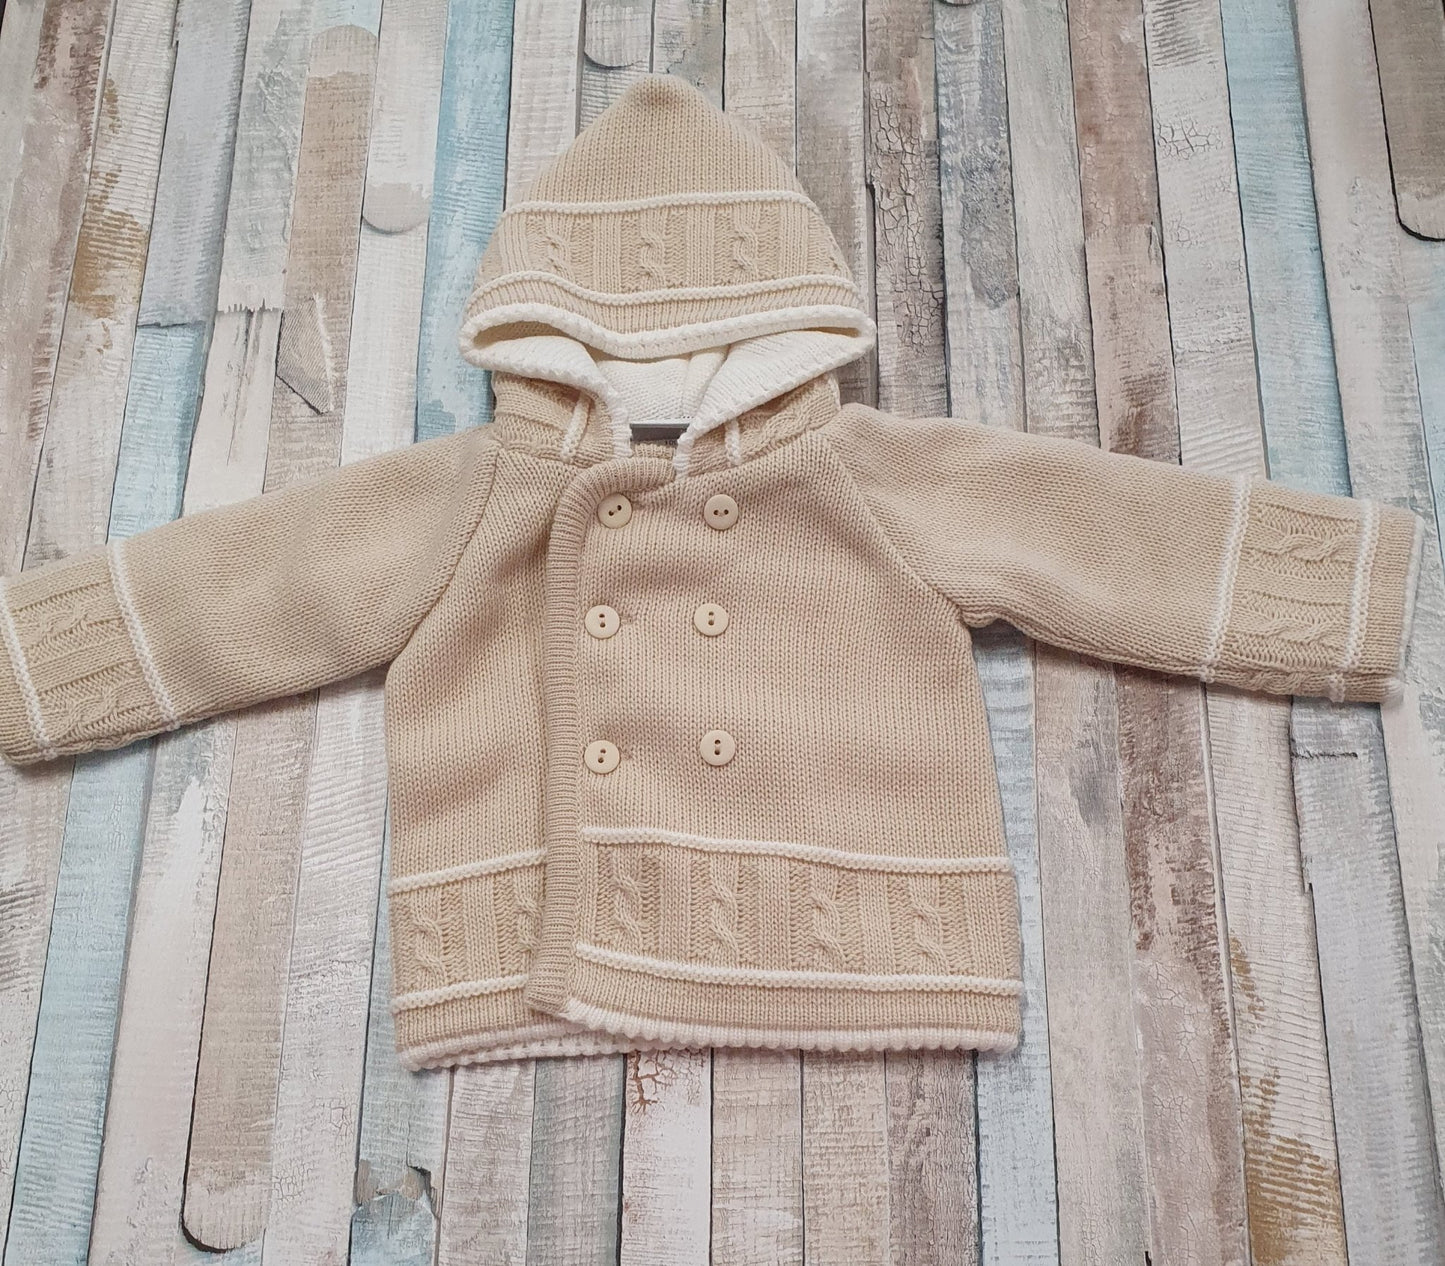 Unisex Baby Beige & White Pram Coat - Nana B Baby & Childrenswear Boutique